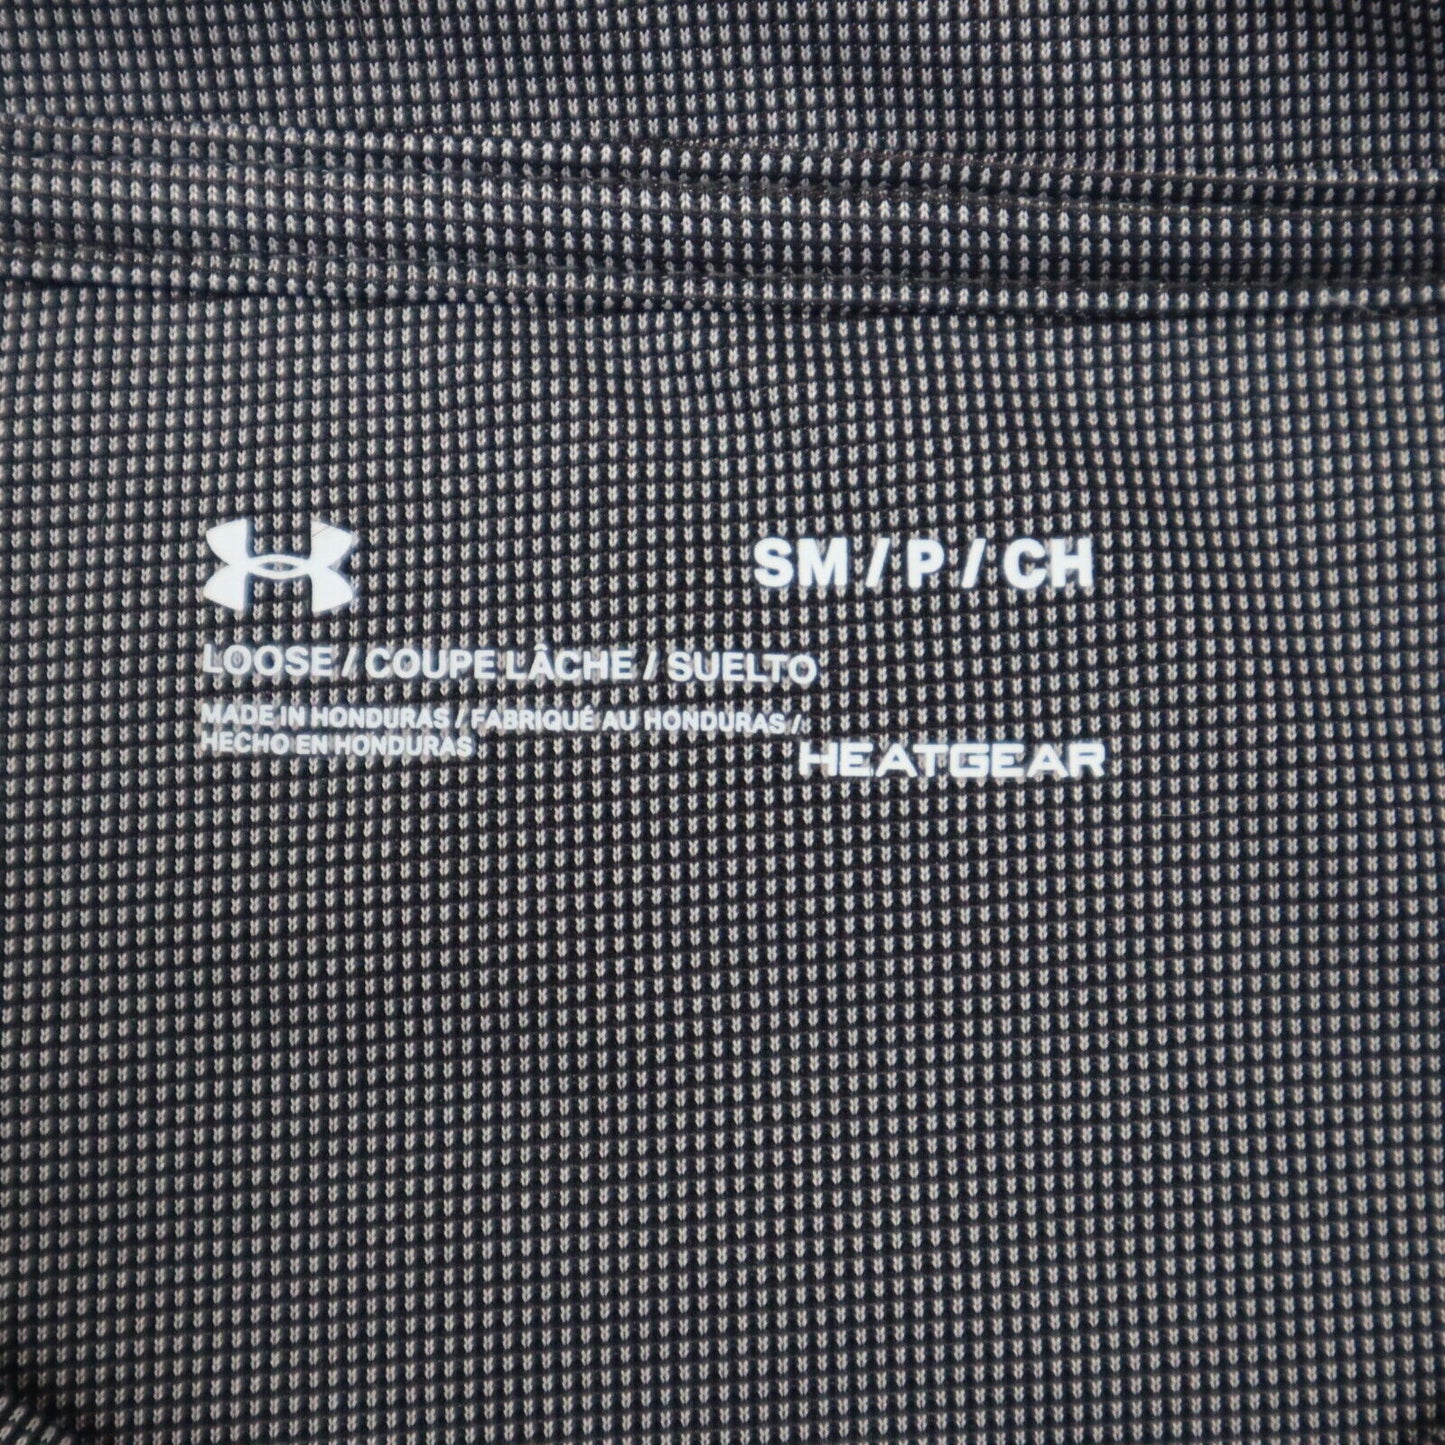 Under Armour CCS Warriors T-Shirt Men's Small Charcoal Graphic Logo Heatgear